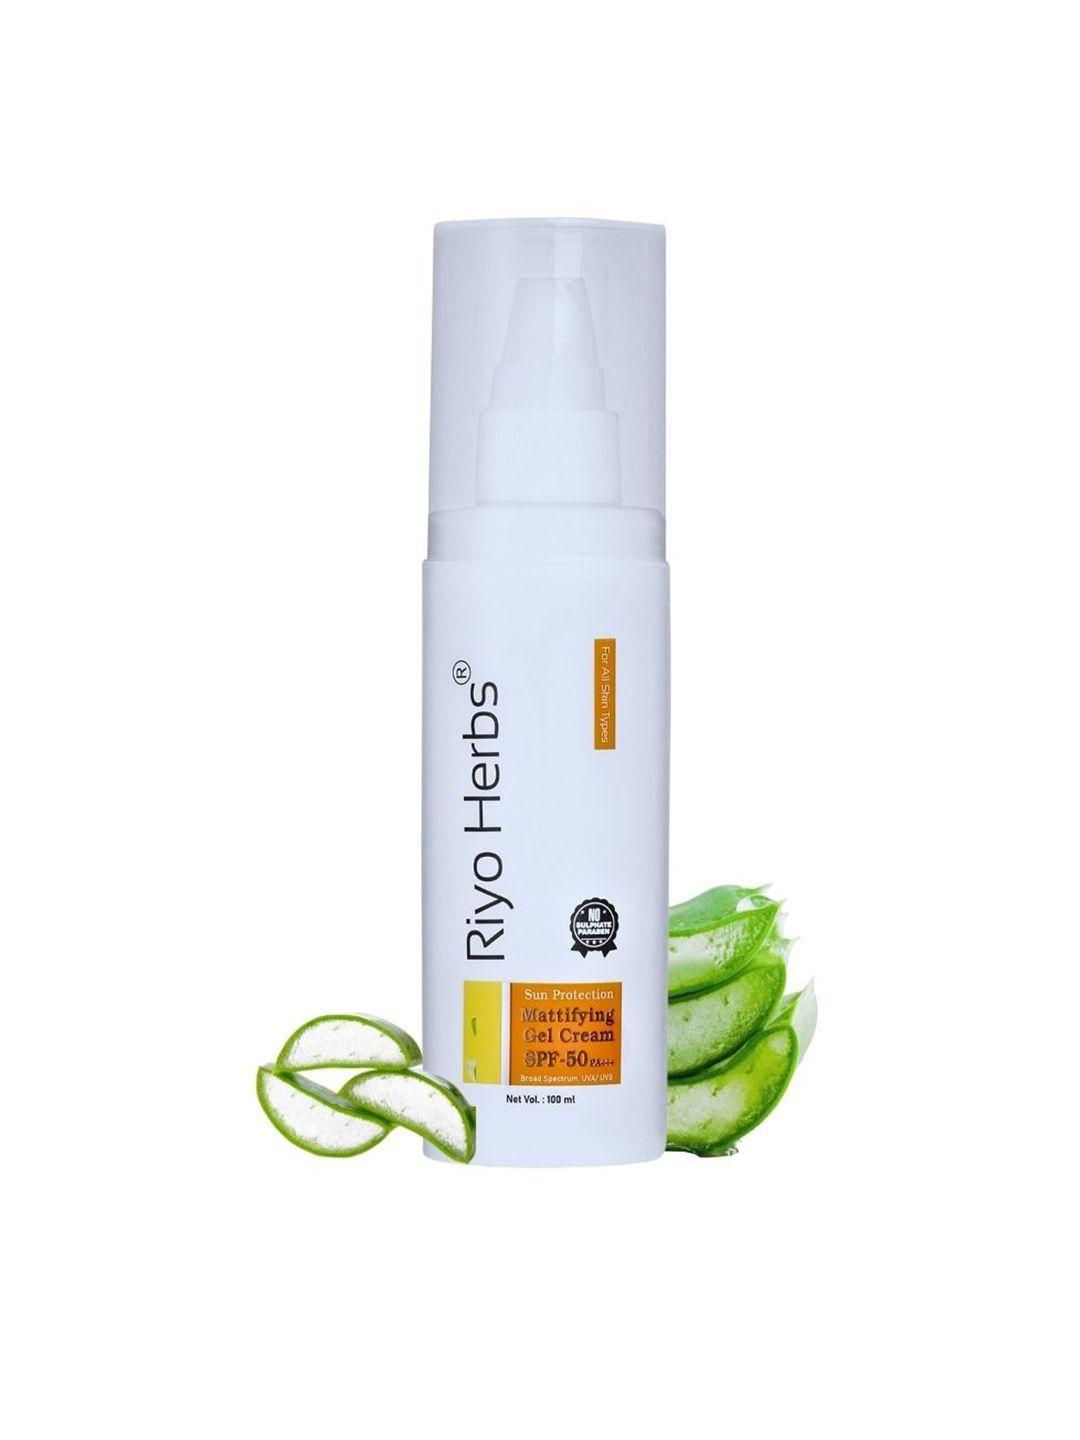 riyo herbs sun protection mattifying gel cream spf 50 pa+++ - 100 ml